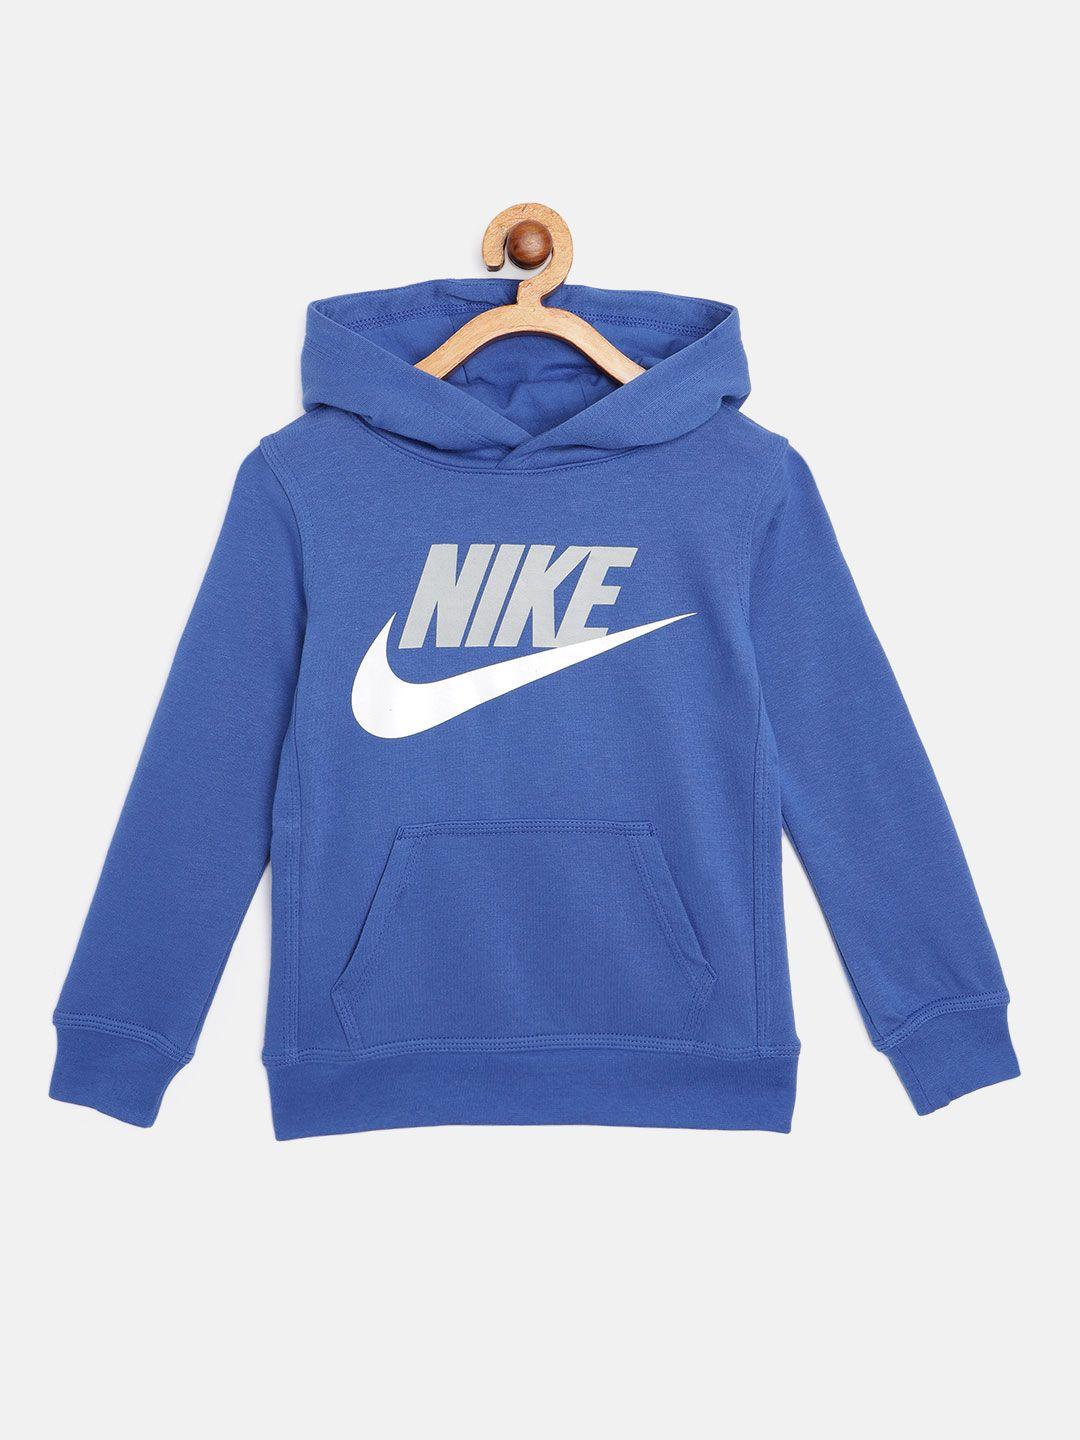 Nike Boys Blue & Grey Brand Logo Print Club HBR Hoodie Sweatshirt